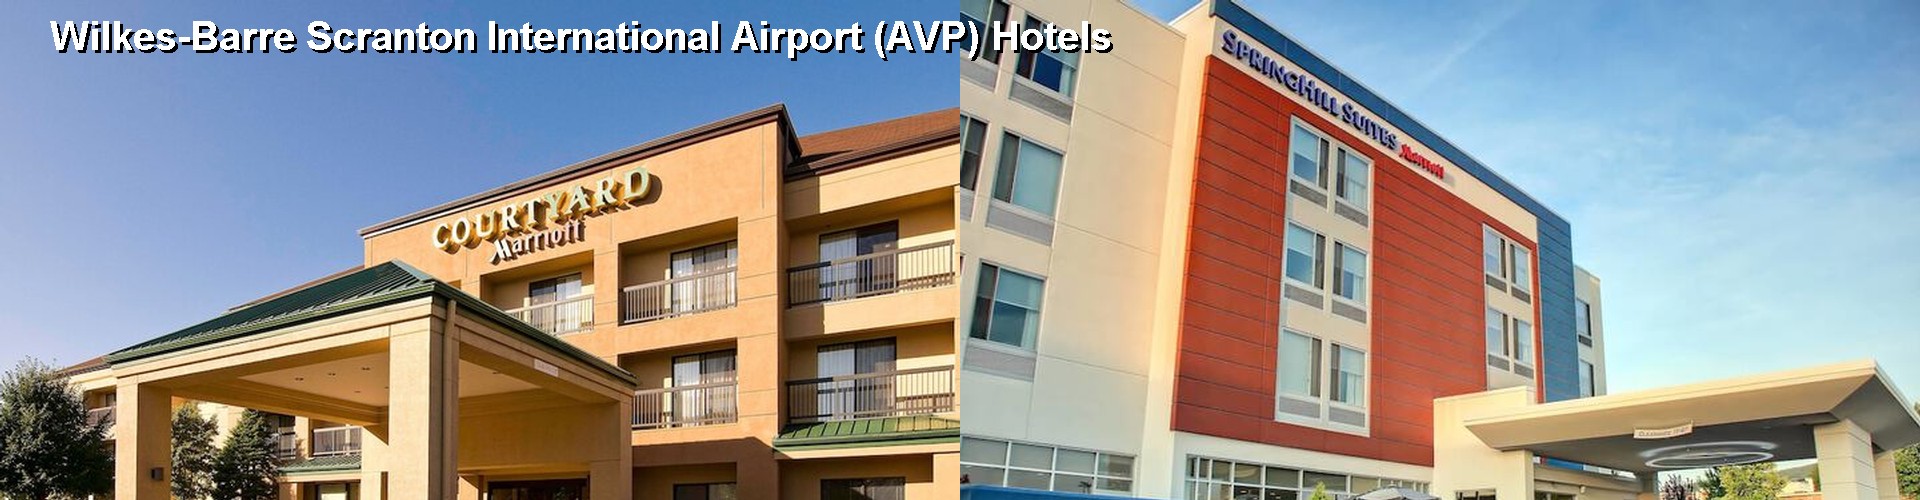 4 Best Hotels near Wilkes-Barre Scranton International Airport (AVP)